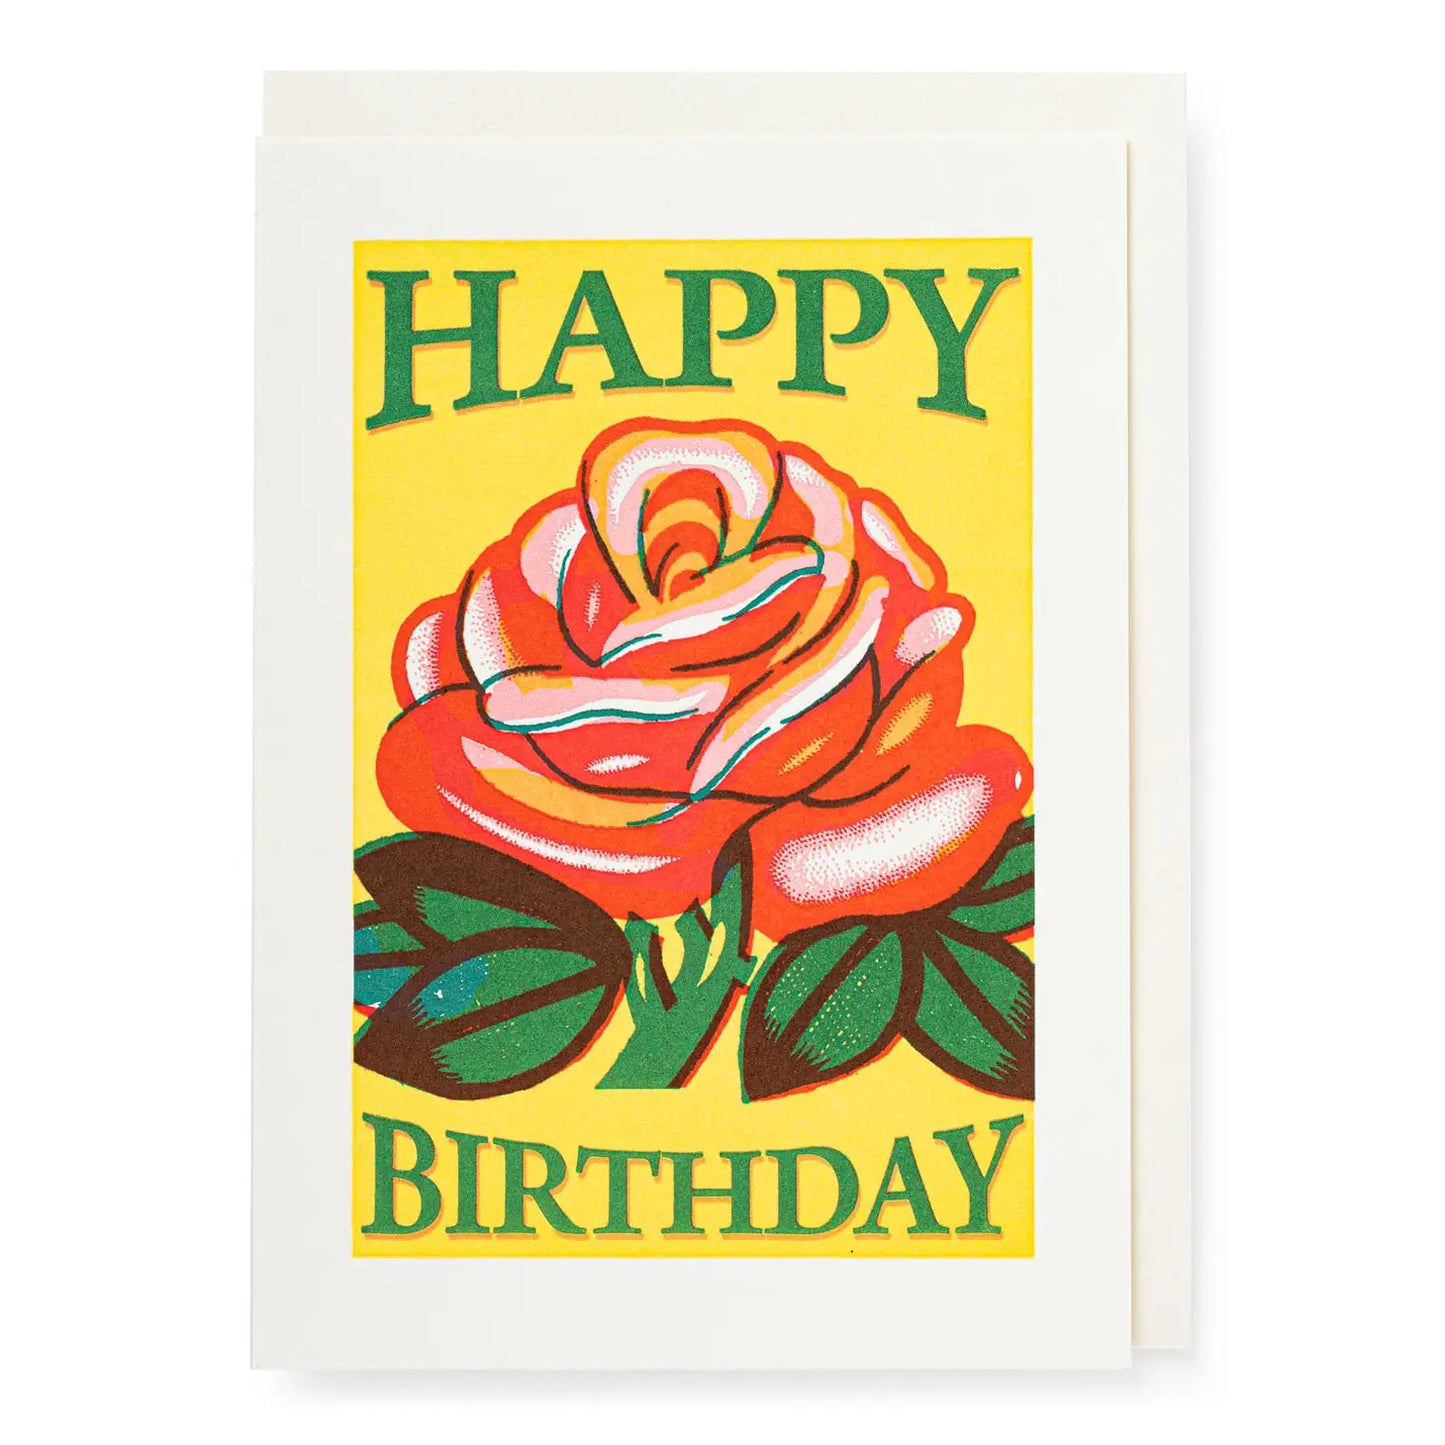 HAPPY BIRTHDAY ROSE GREETING CARD ARCHIVIST GALLERY